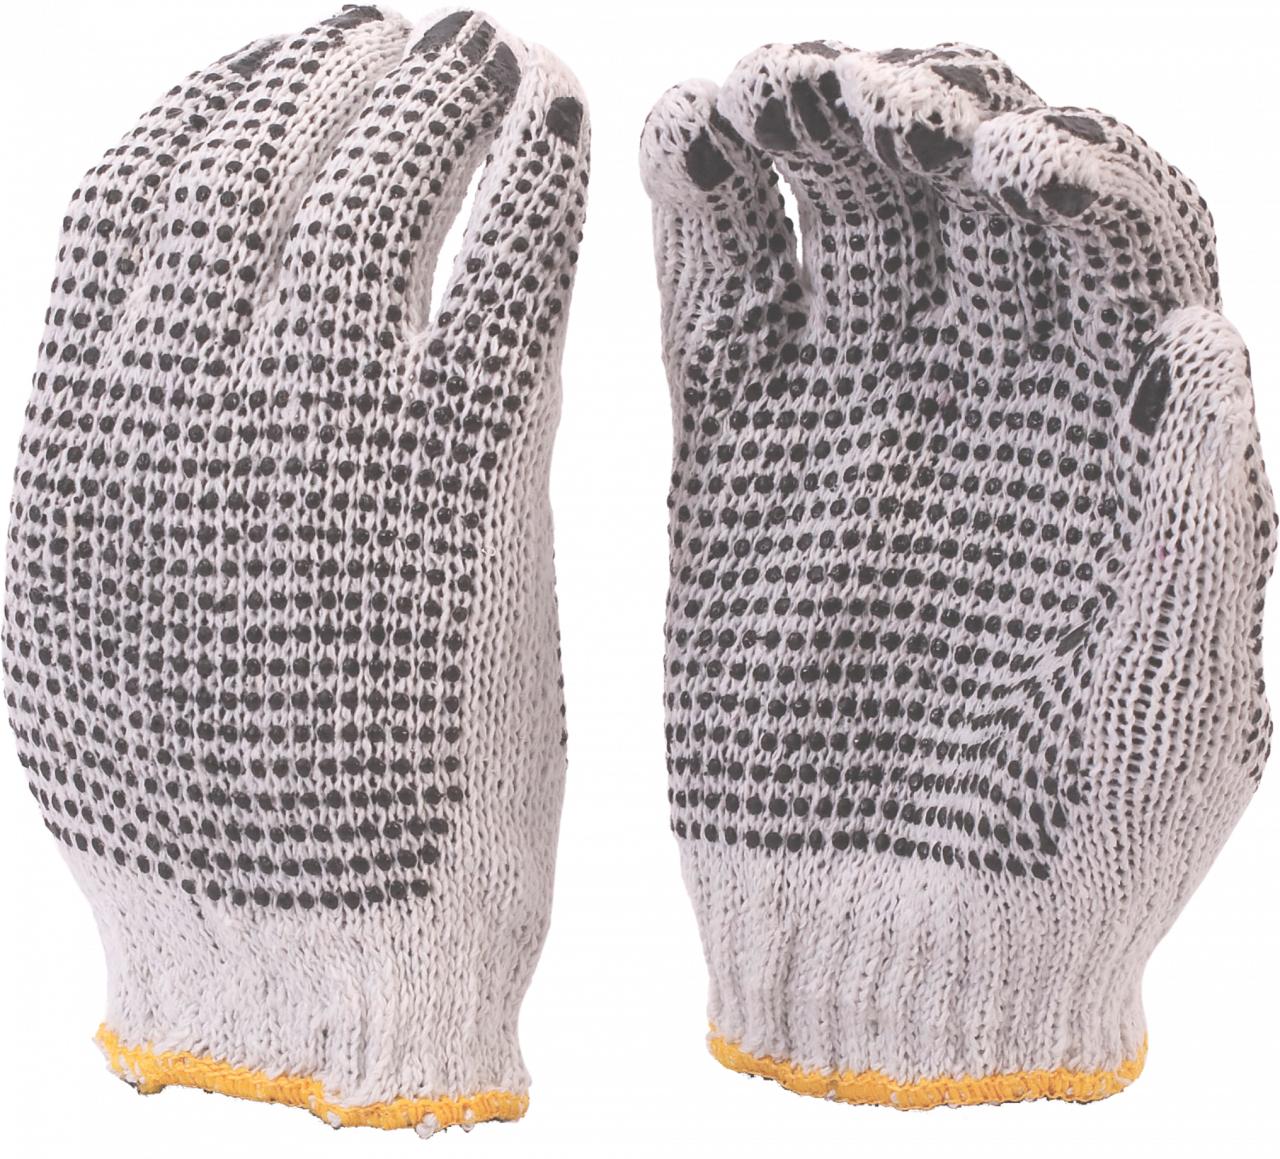 Cotton Protective Gloves Knit Revrsble Polka Dot